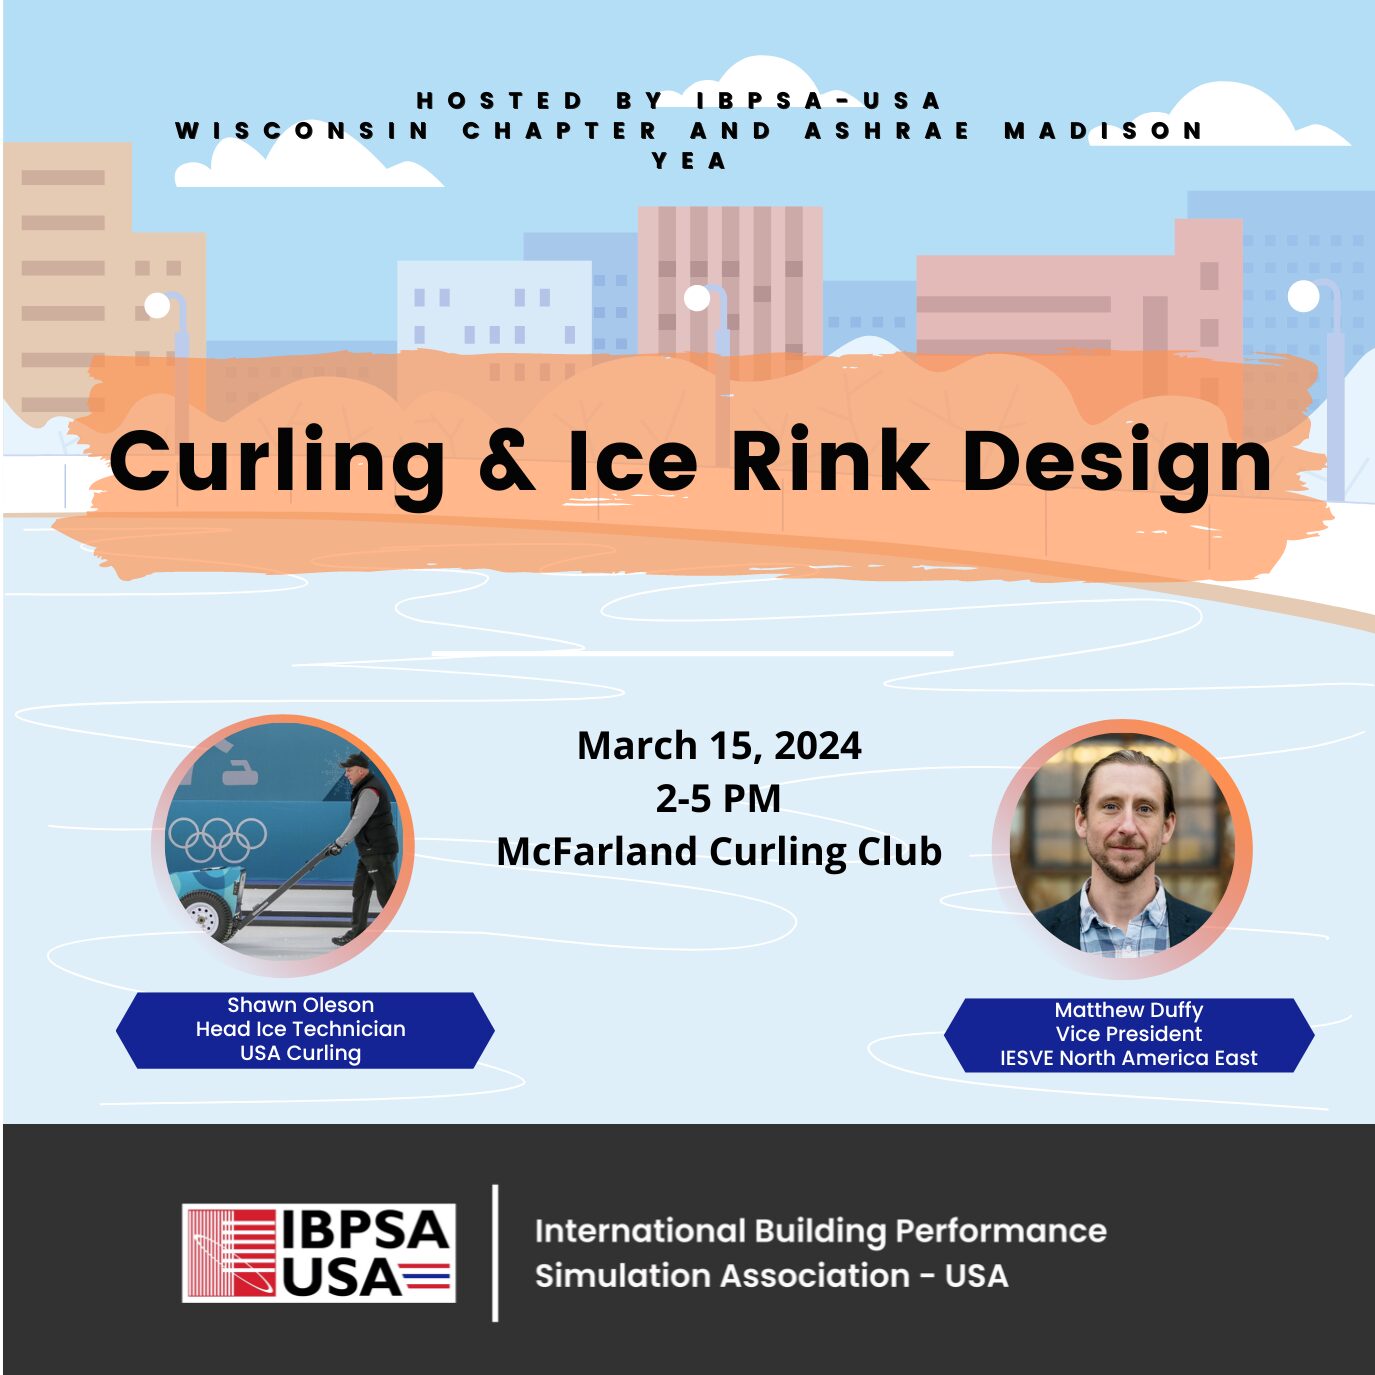 IBPSA-USA Wisconsin & ASHRAE Madison YEA Crossover Event: Curling